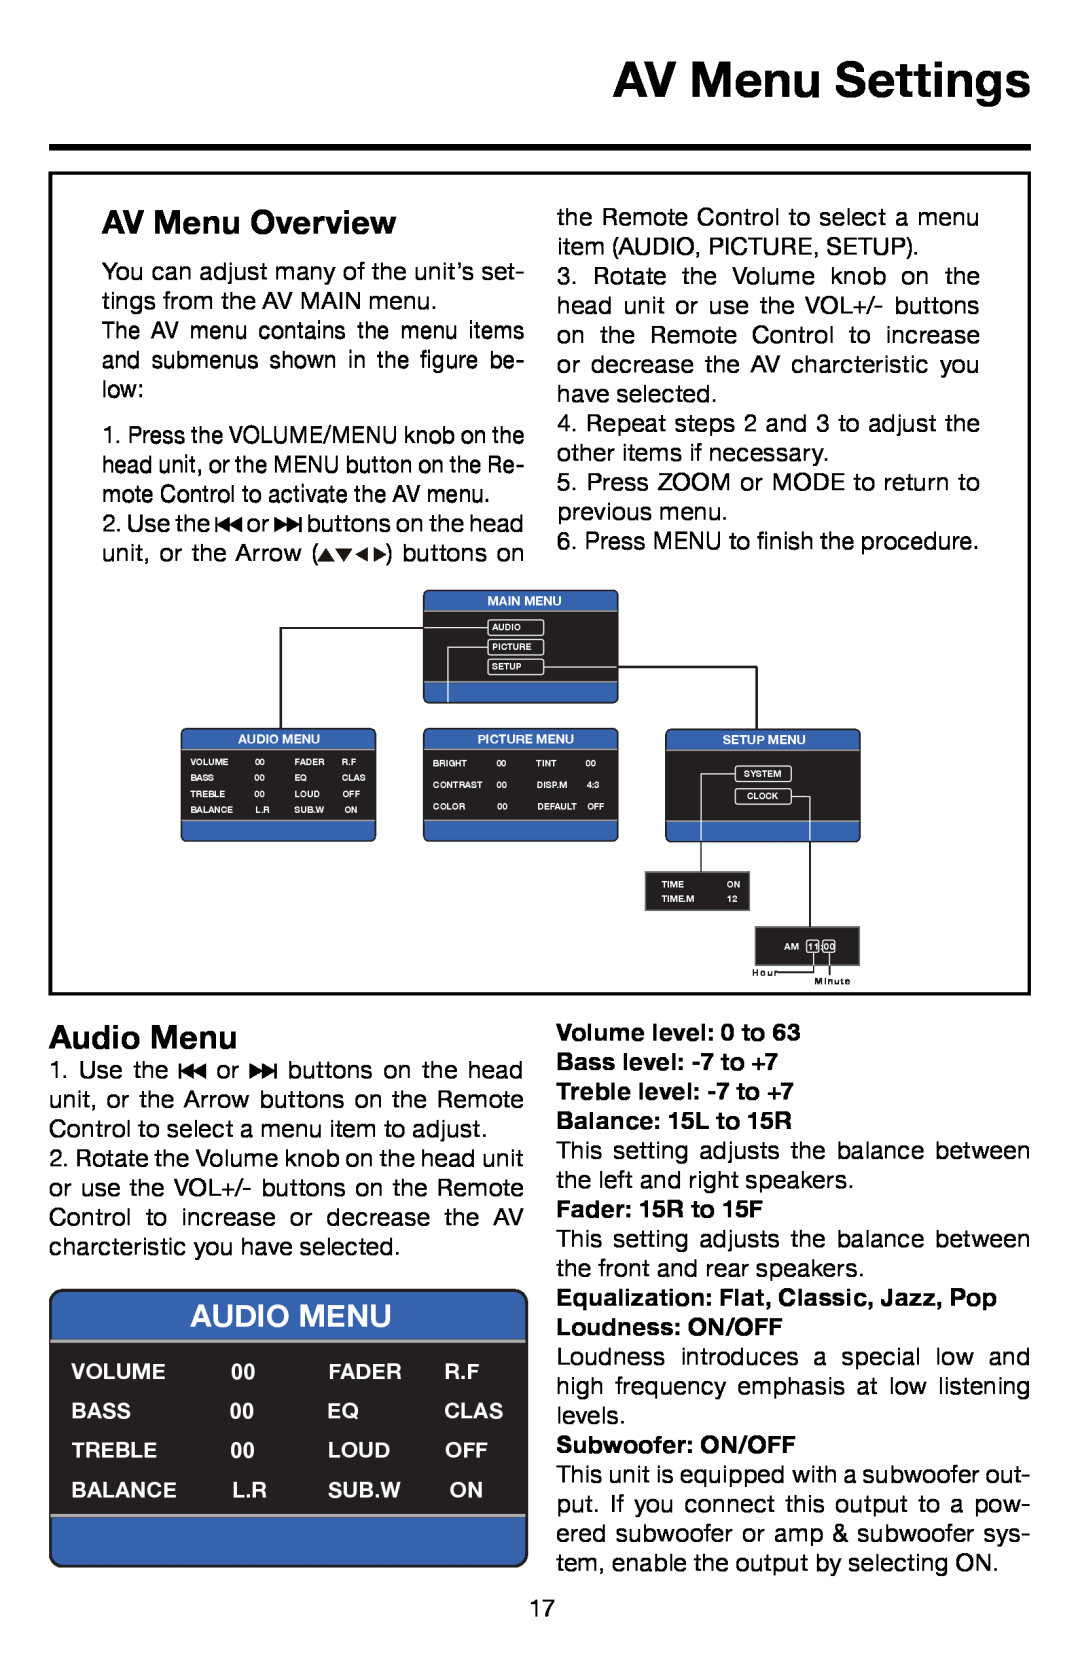 Roadmaster VRVD630 AV Menu Settings, AV Menu Overview, Audio Menu, Volume level 0 to Bass level -7to +7, Fader 15R to 15F 